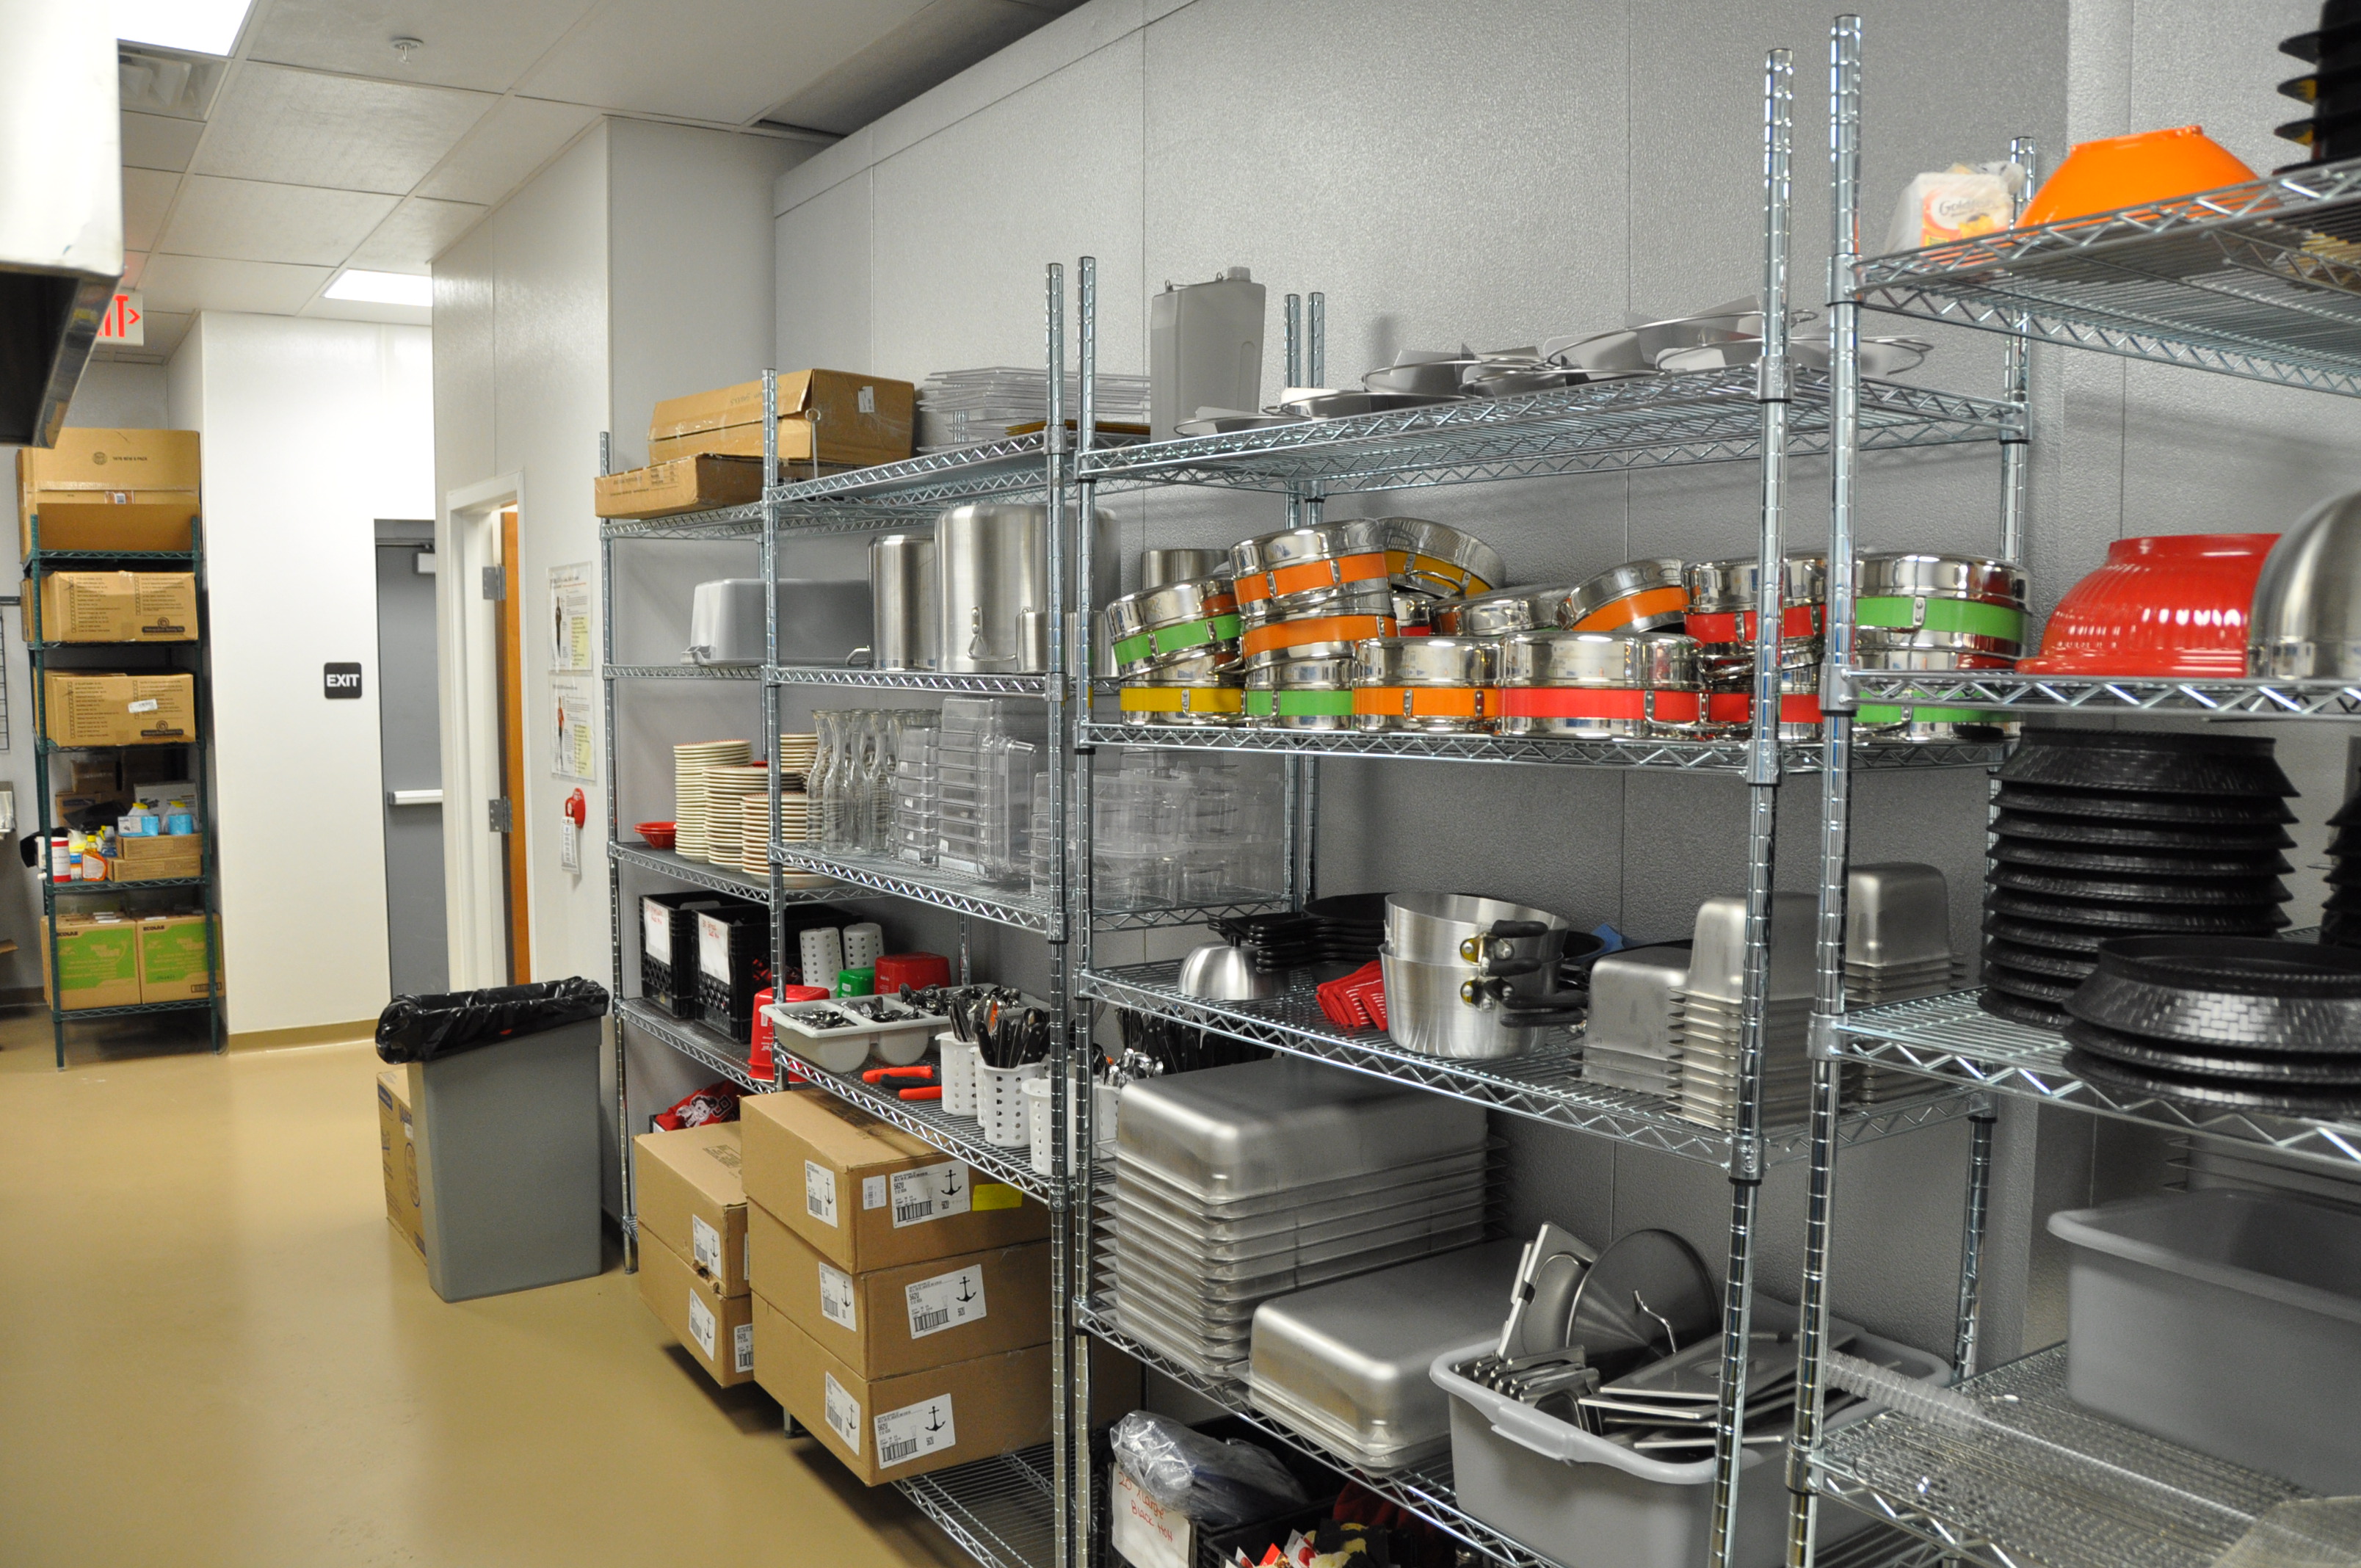 Commercial Kitchen Storage